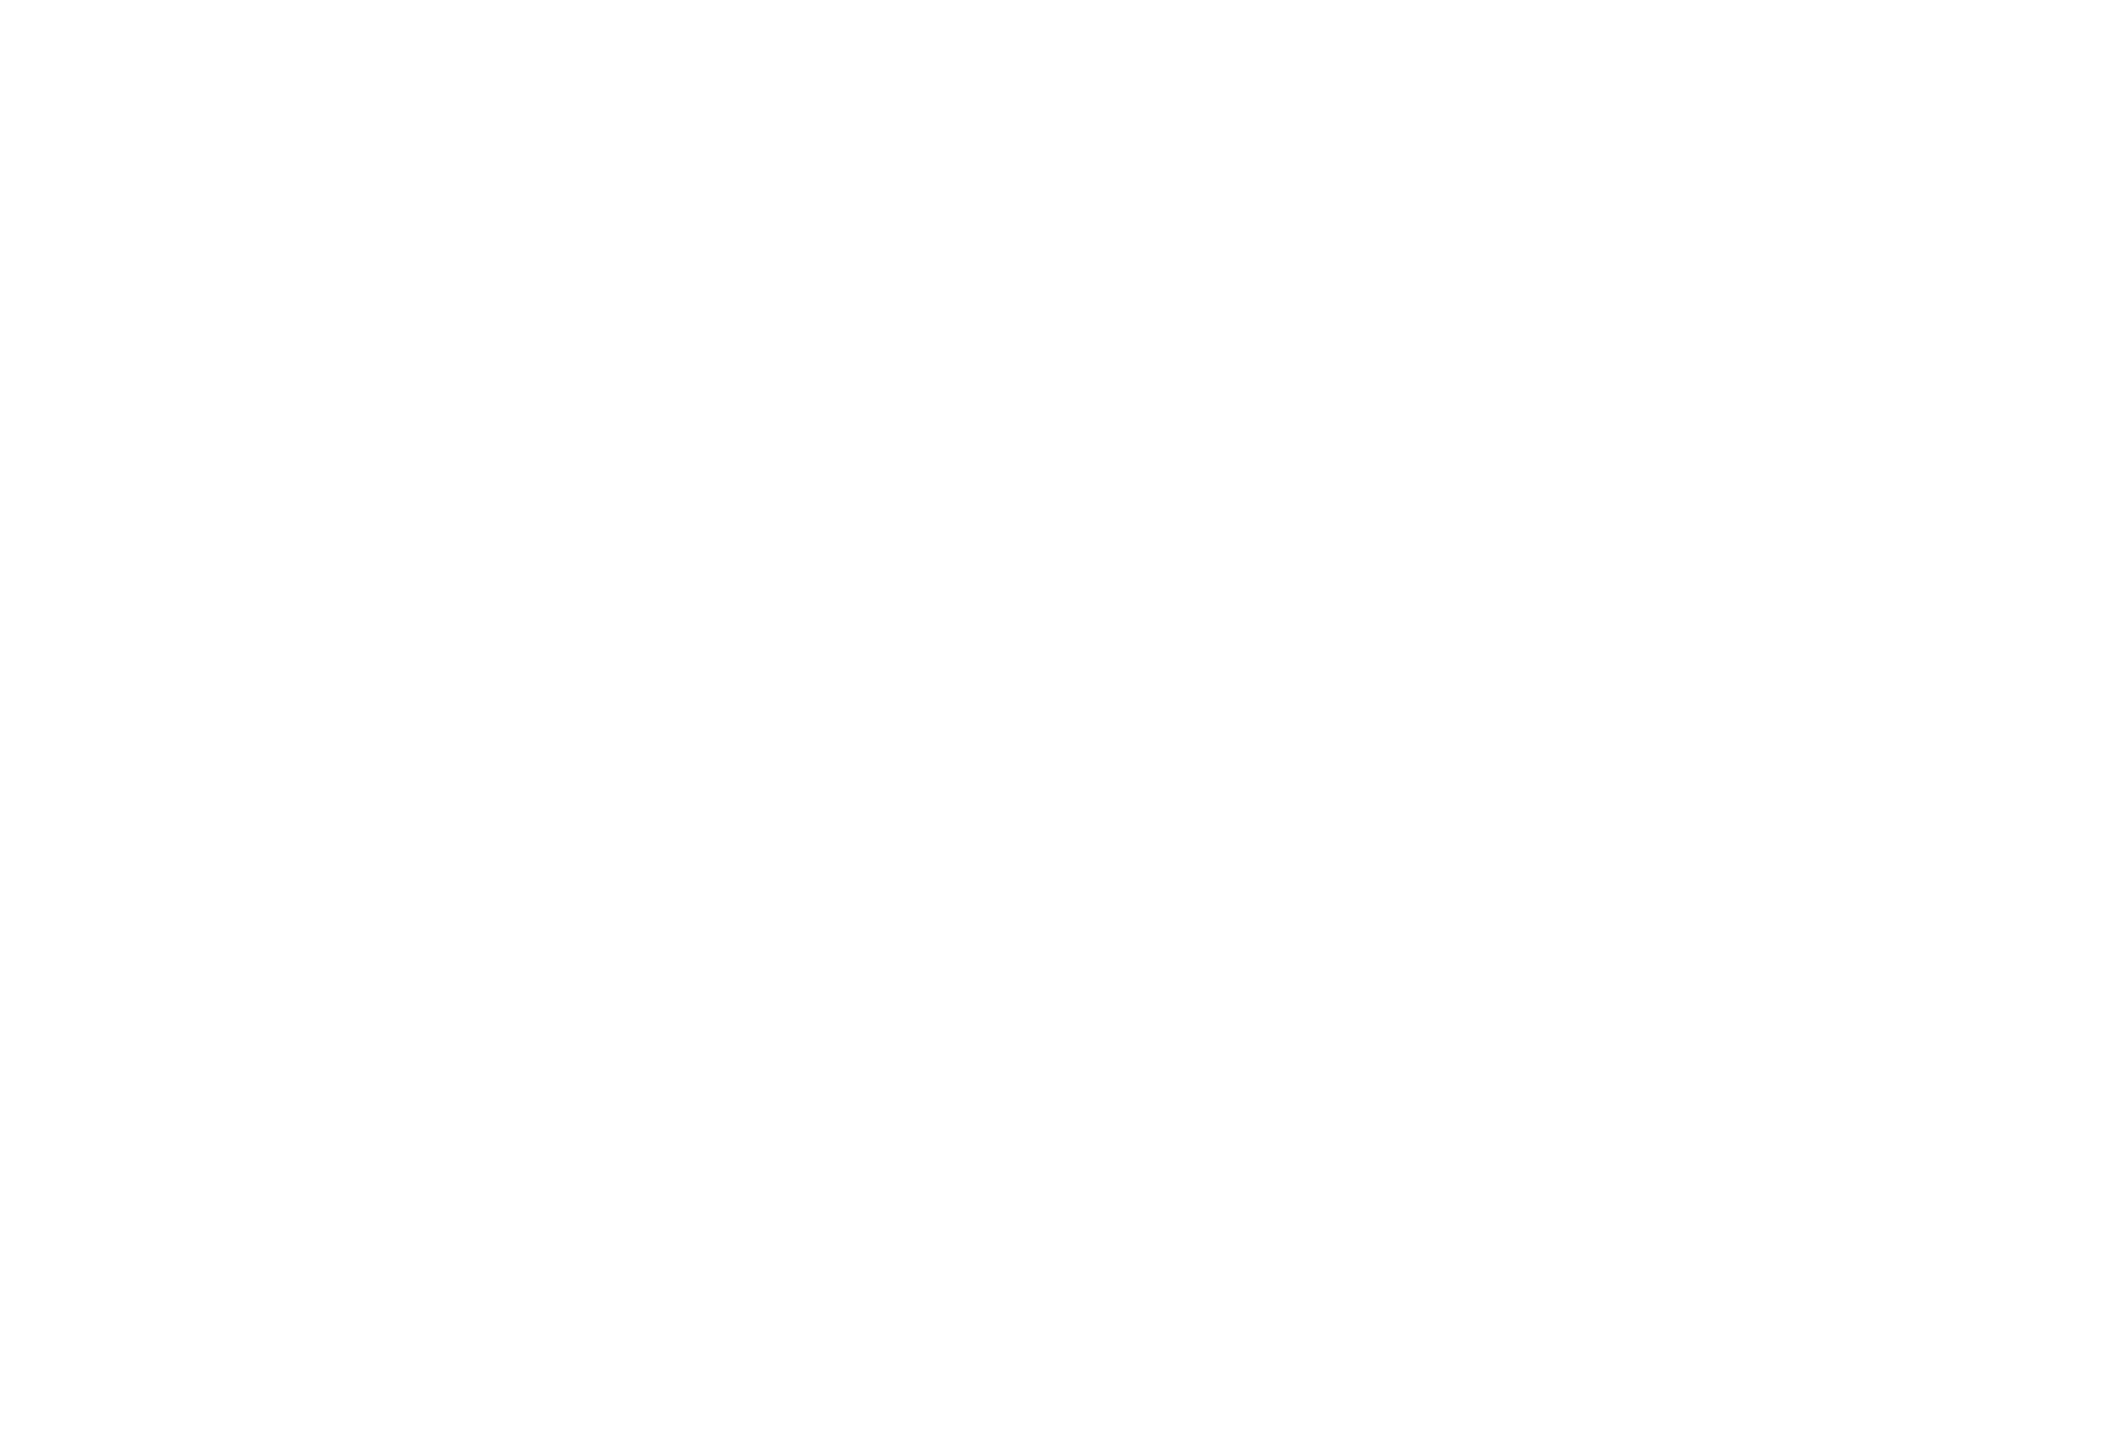 Lincoln Douglas Center